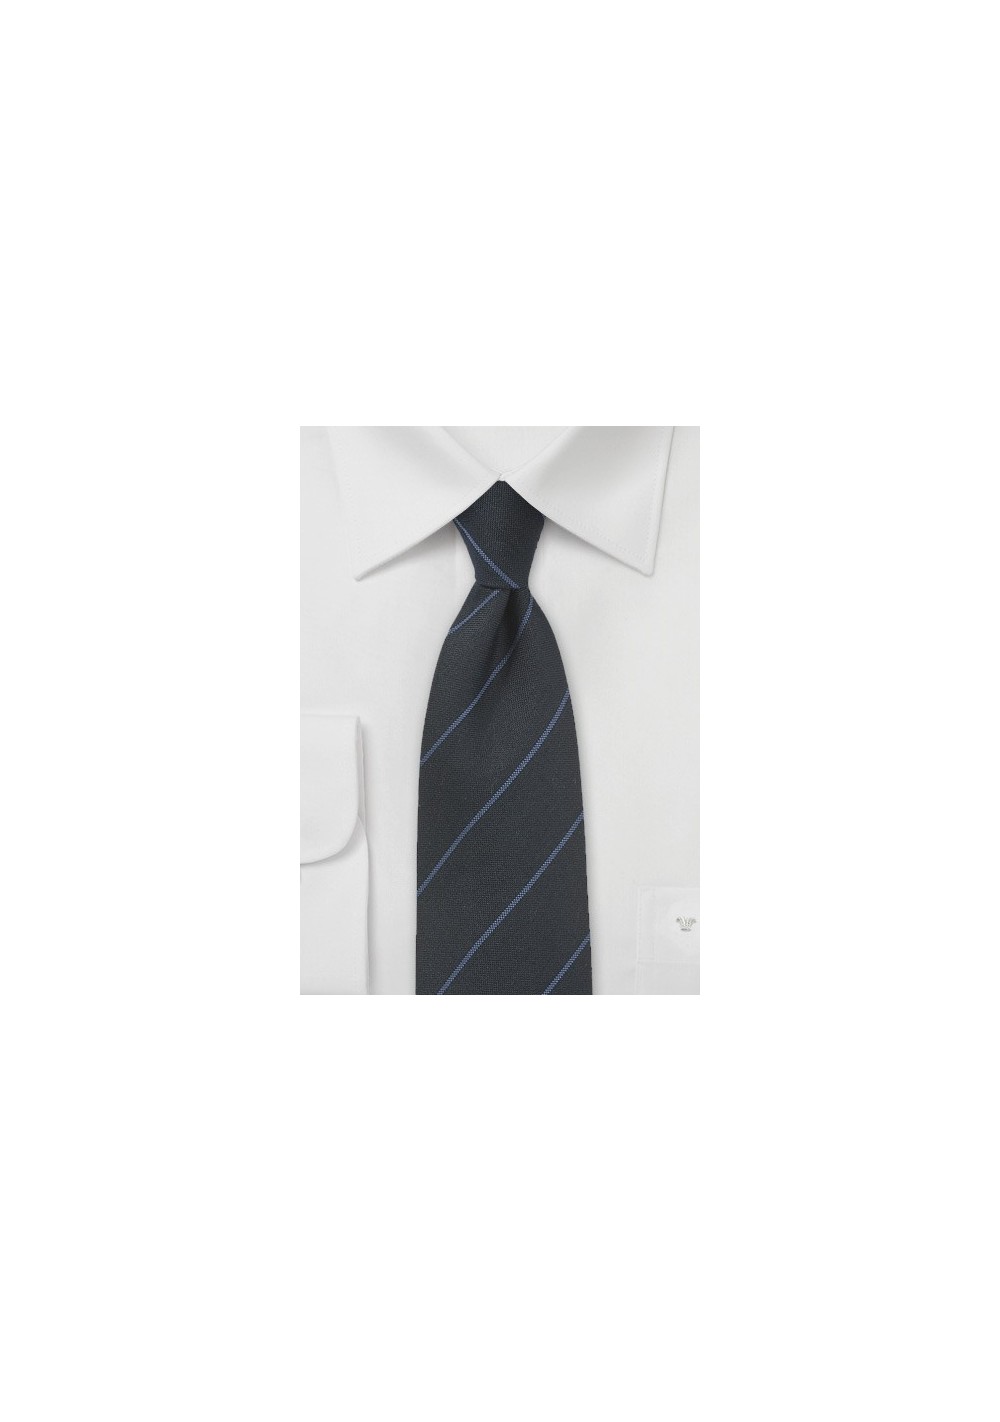 Wool Pencil Stripe Tie in Black and Blue